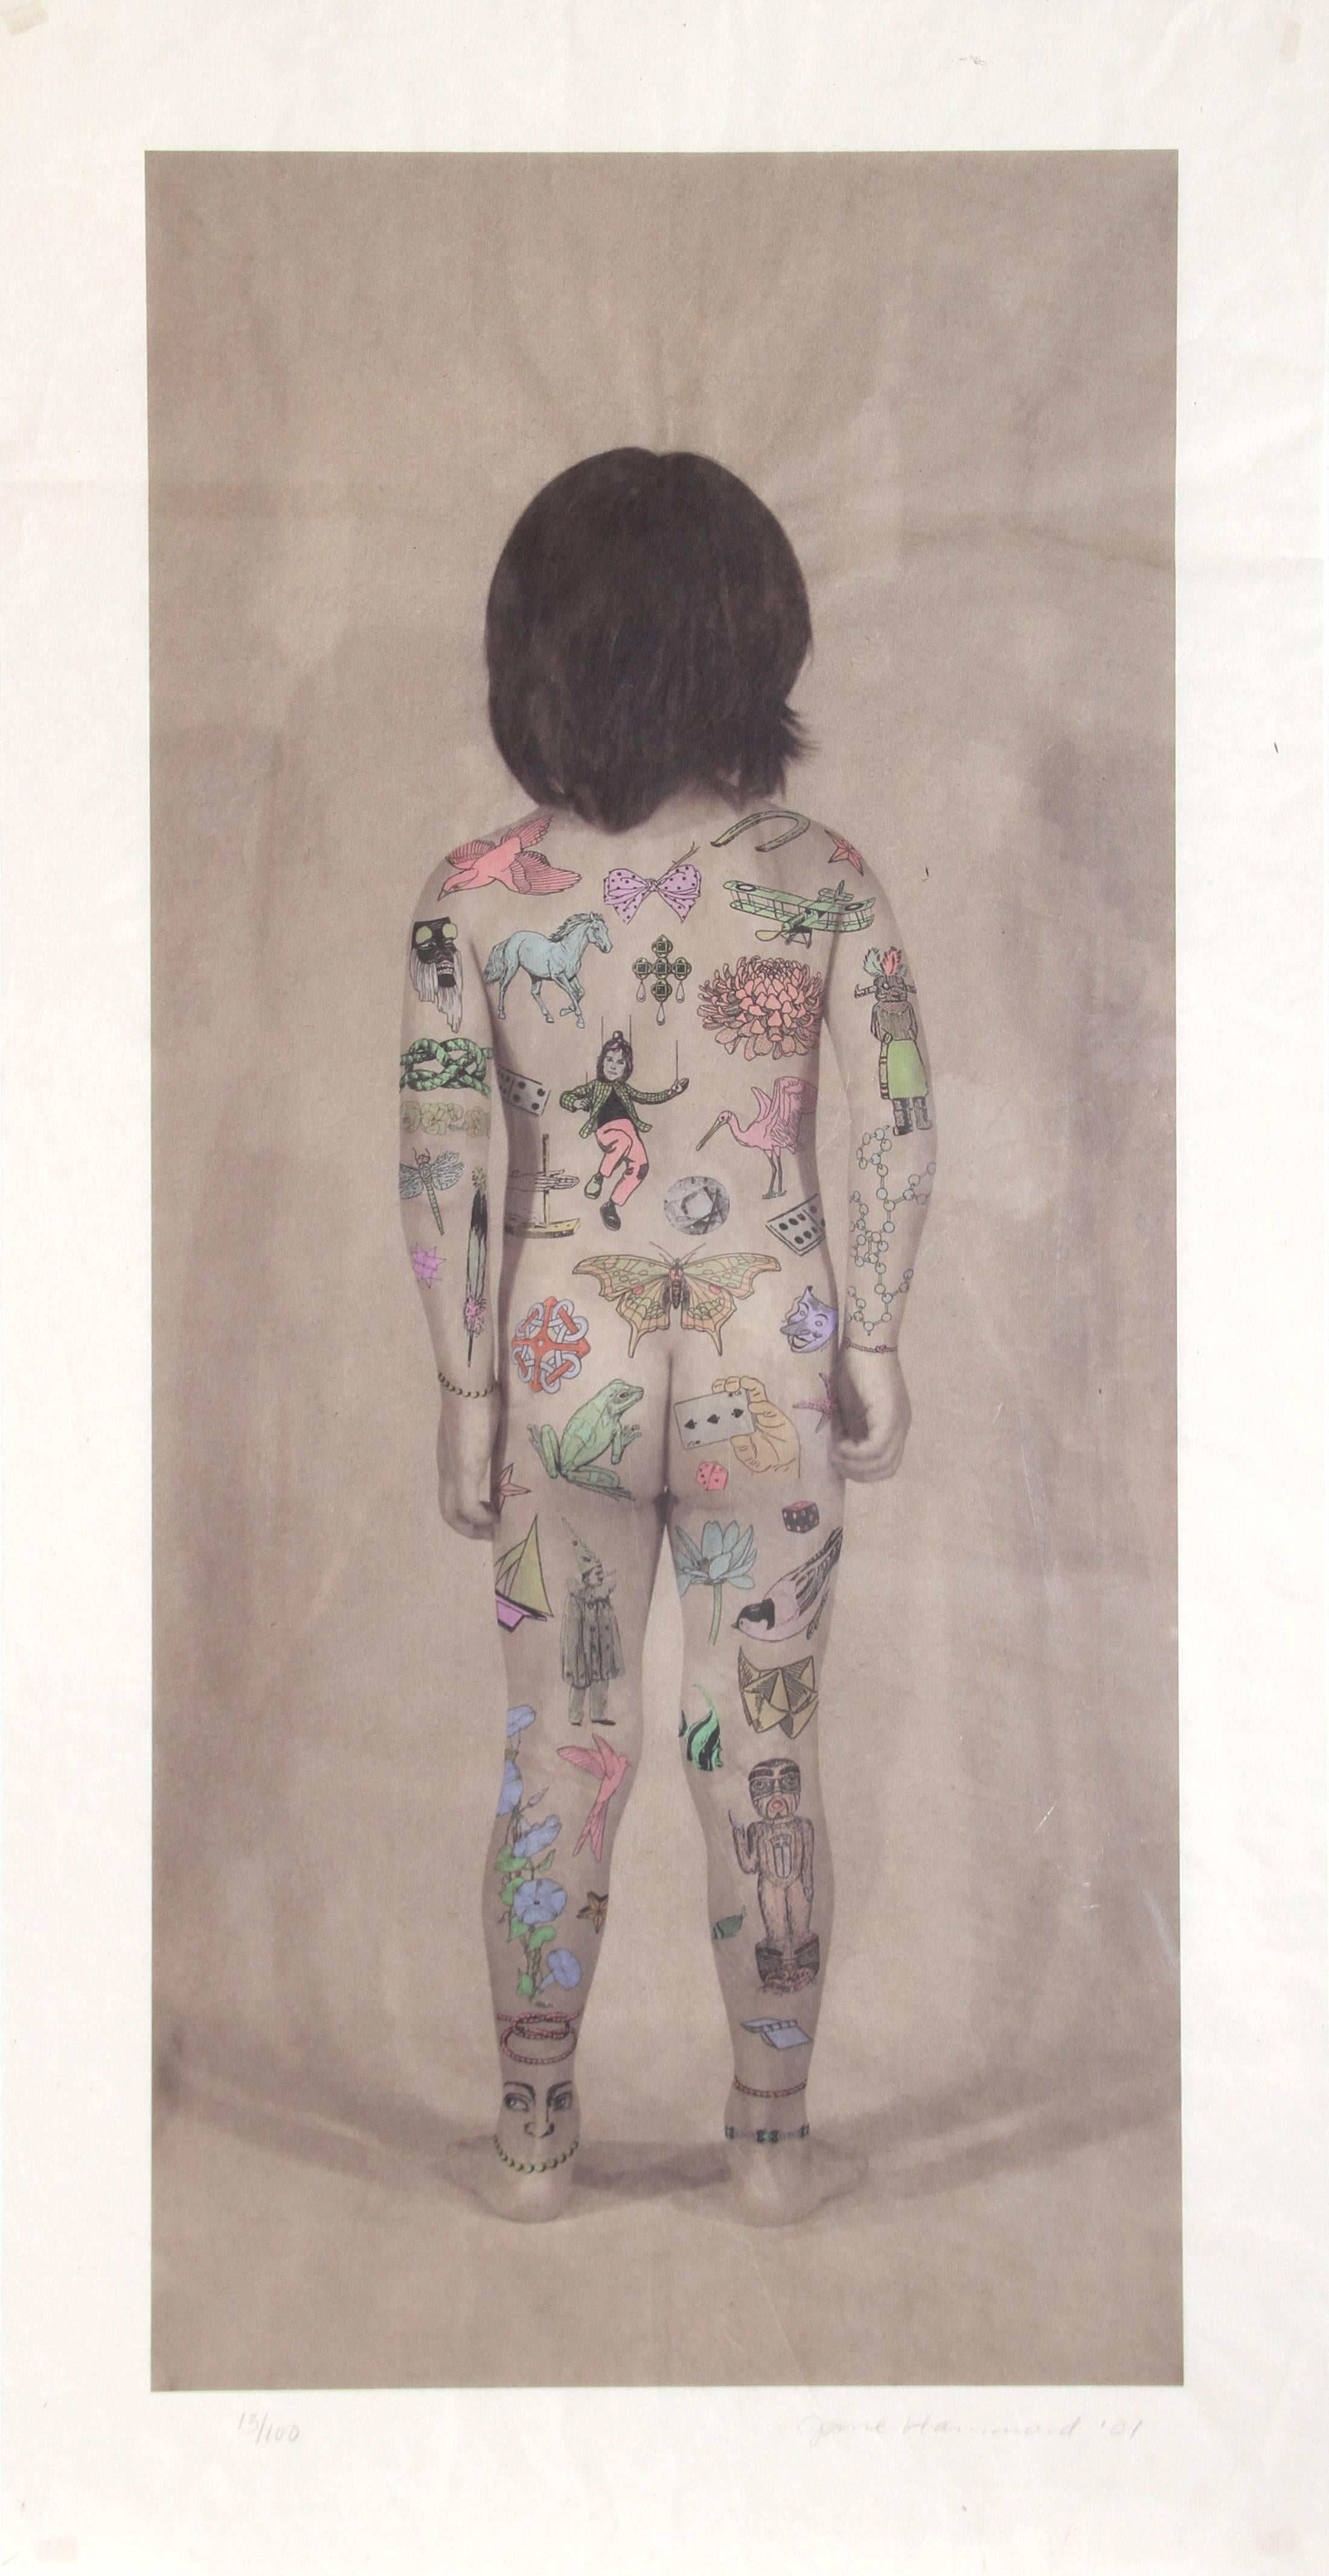 Jane Hammond Nude Print - Body Language